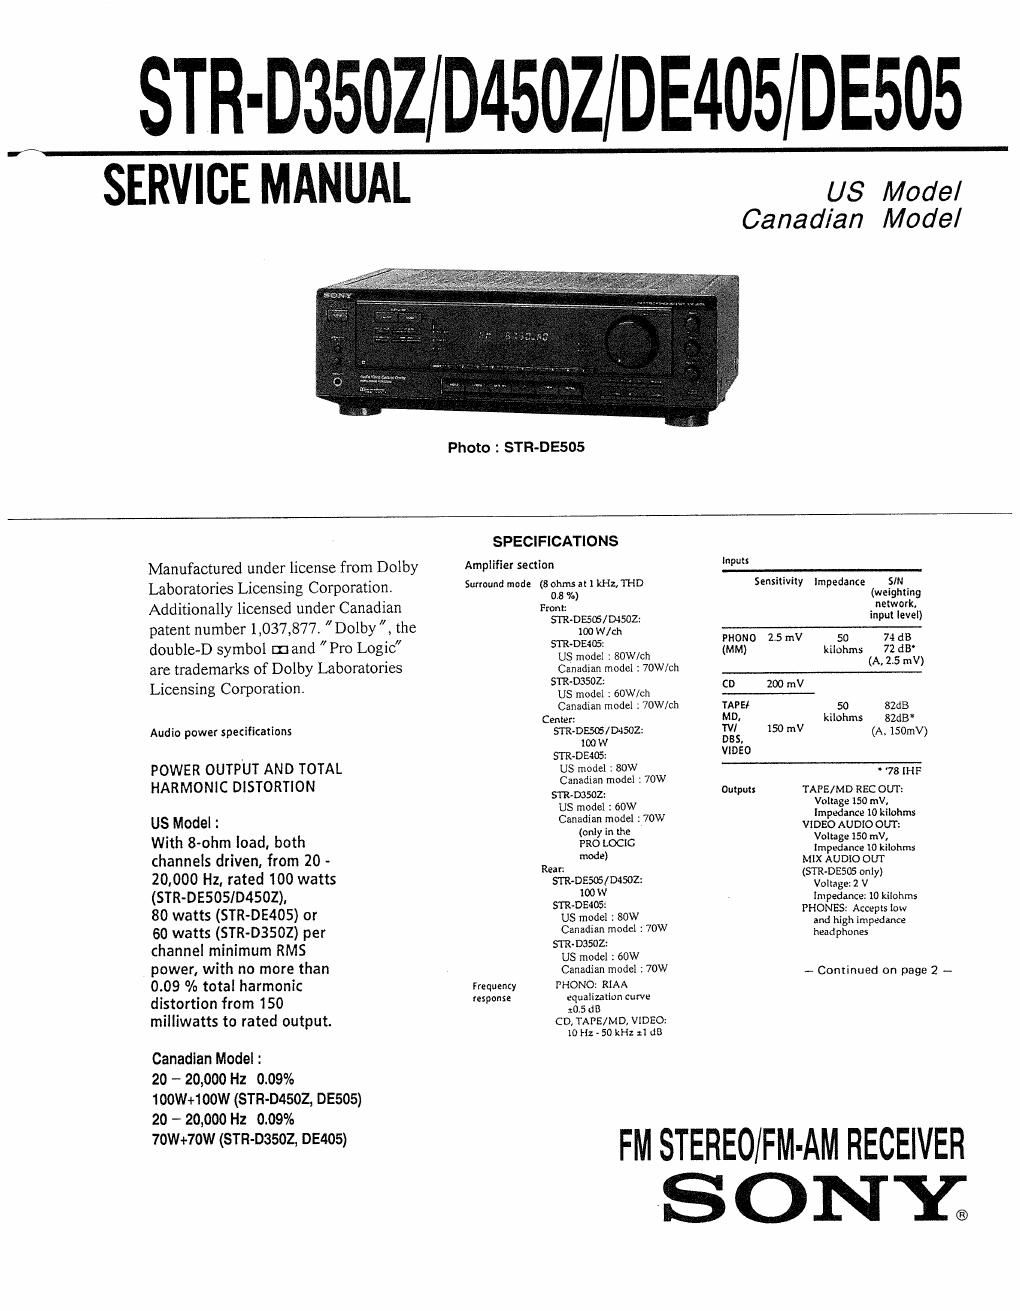 sony str de 505 service manual